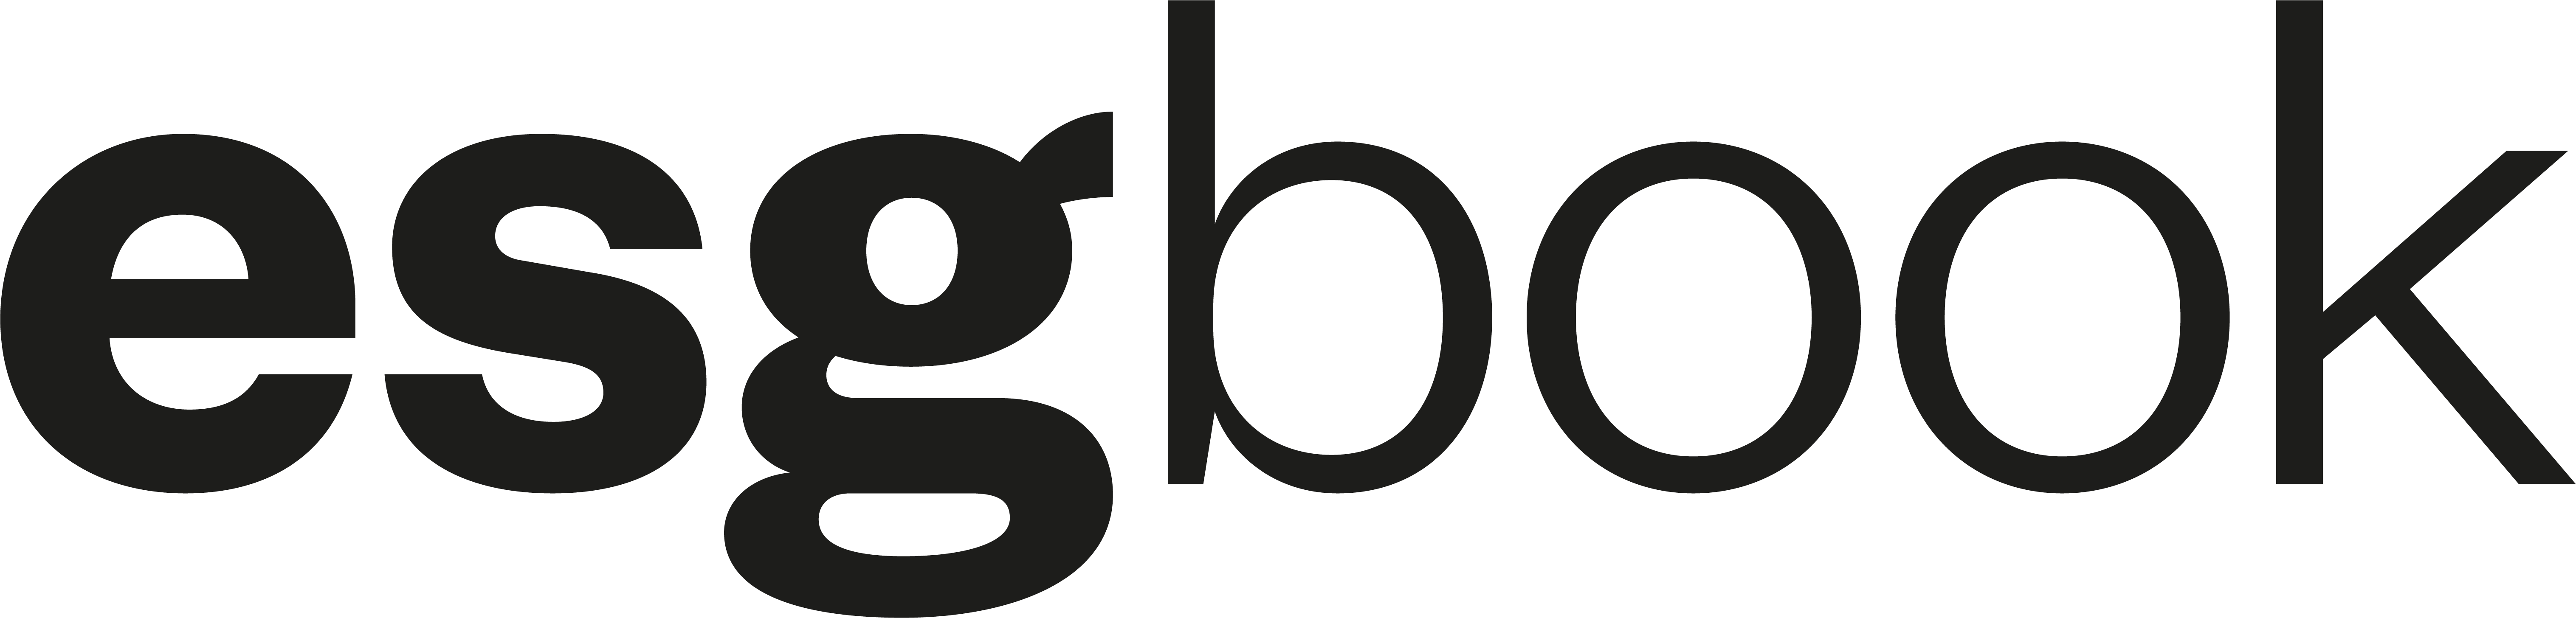 esgbook logo